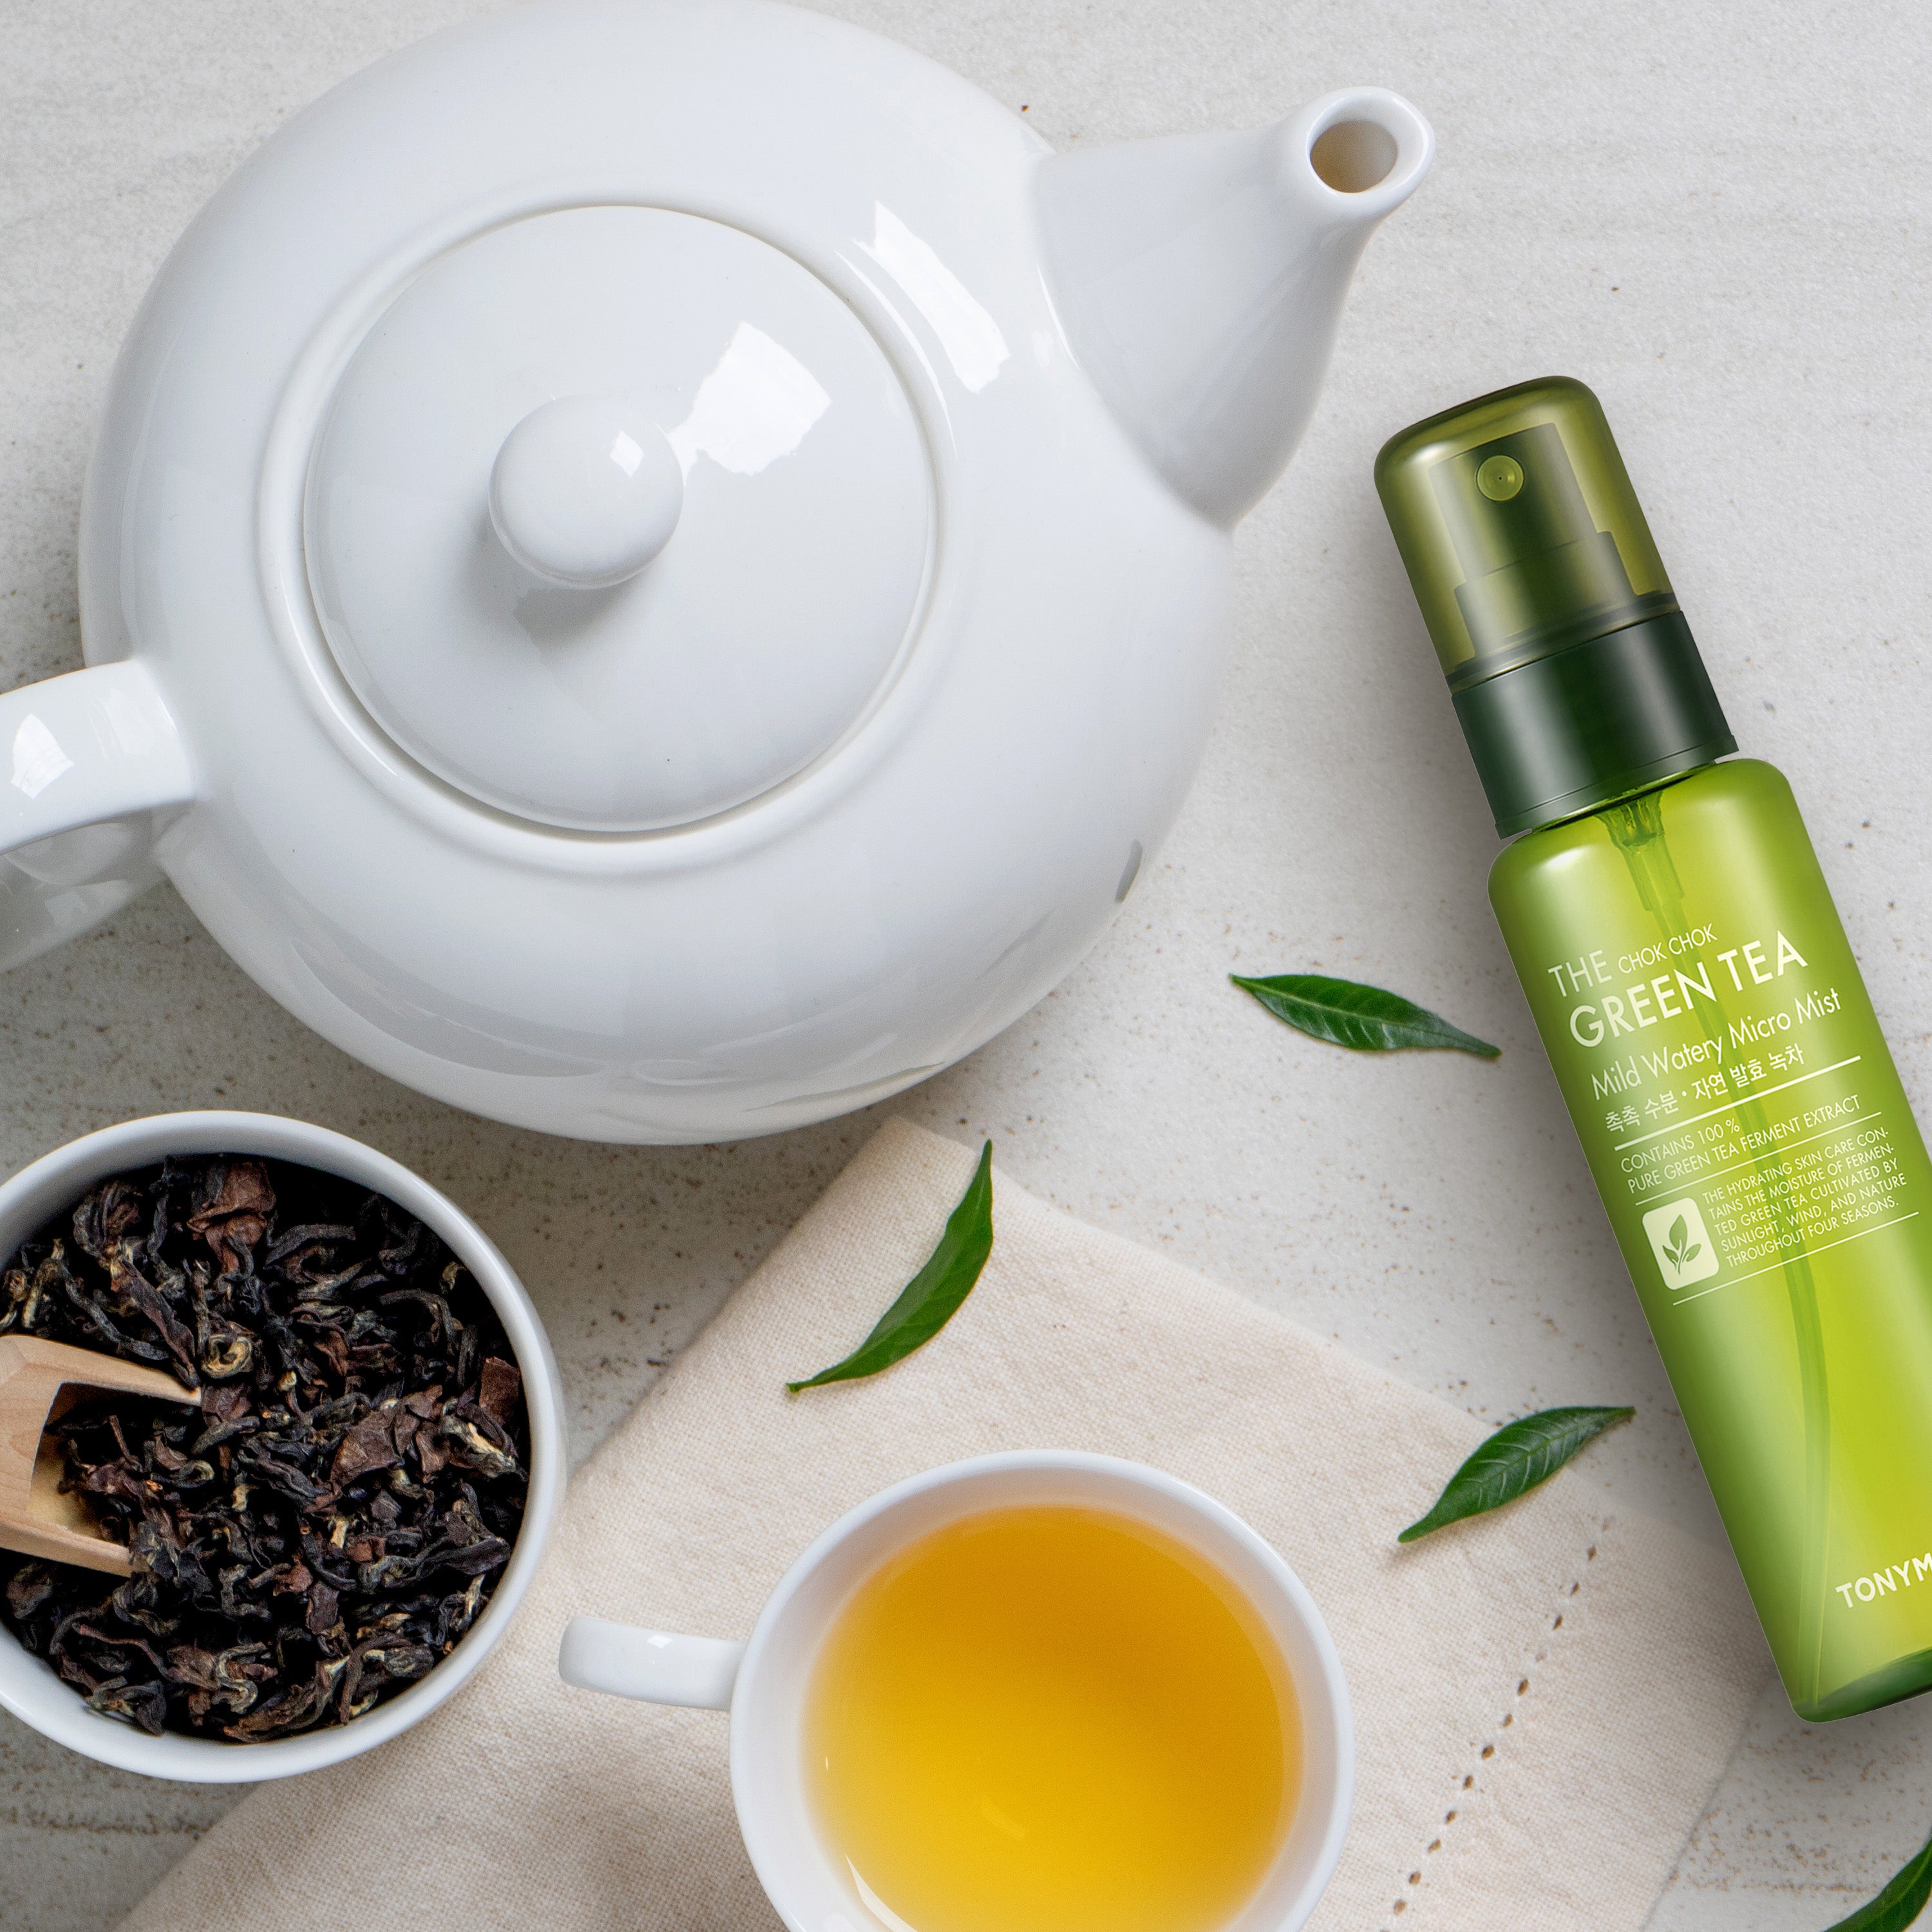 TONYMOLY The Chok Chok Green Tea Watery Micro Mist 90ml - Face Mist | Korean Skin Care